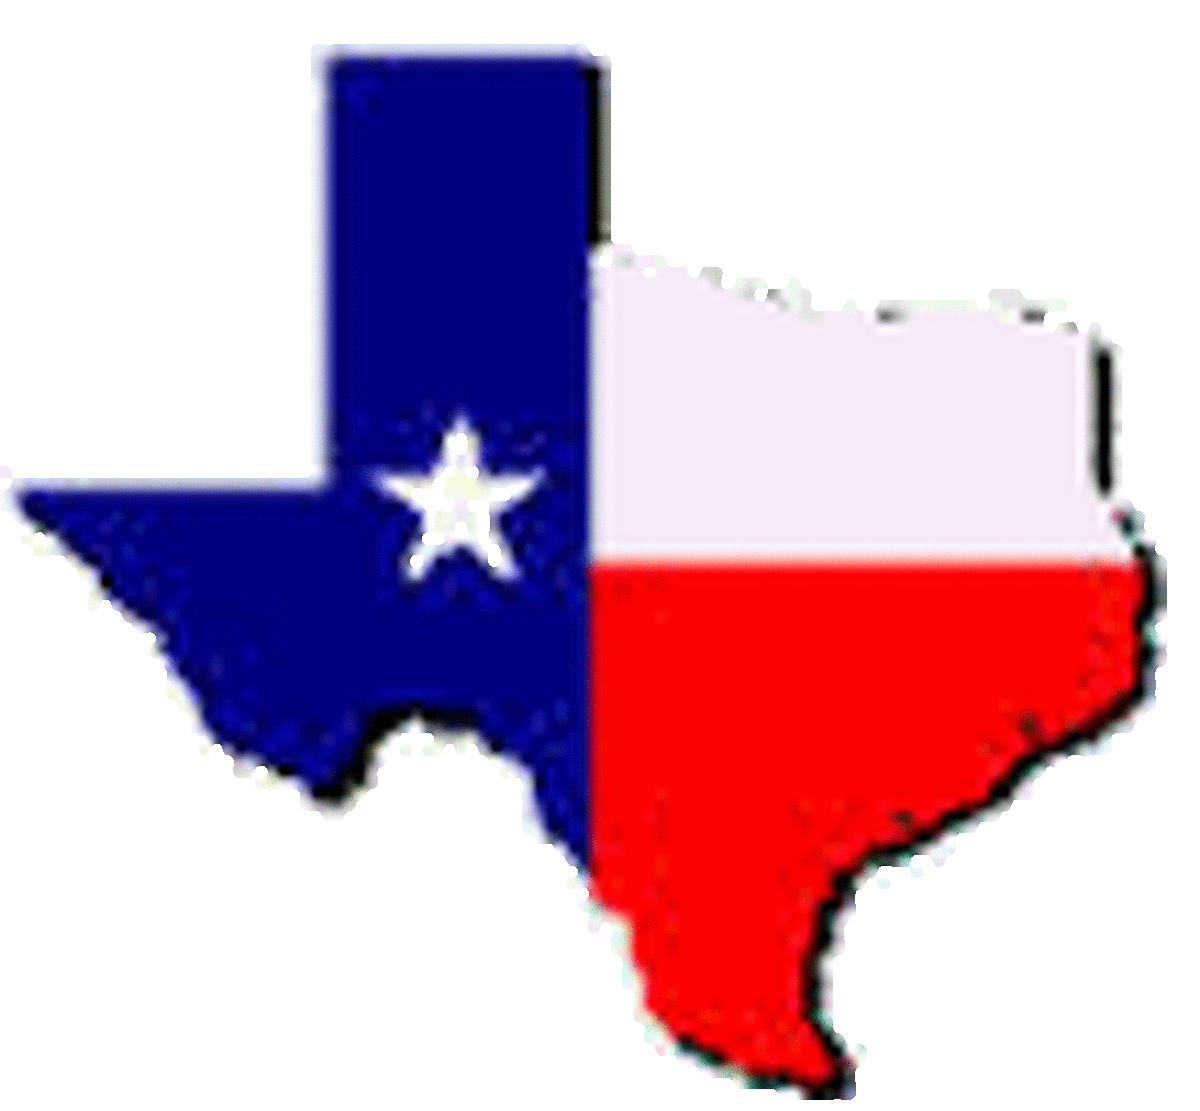 State of Texas logo